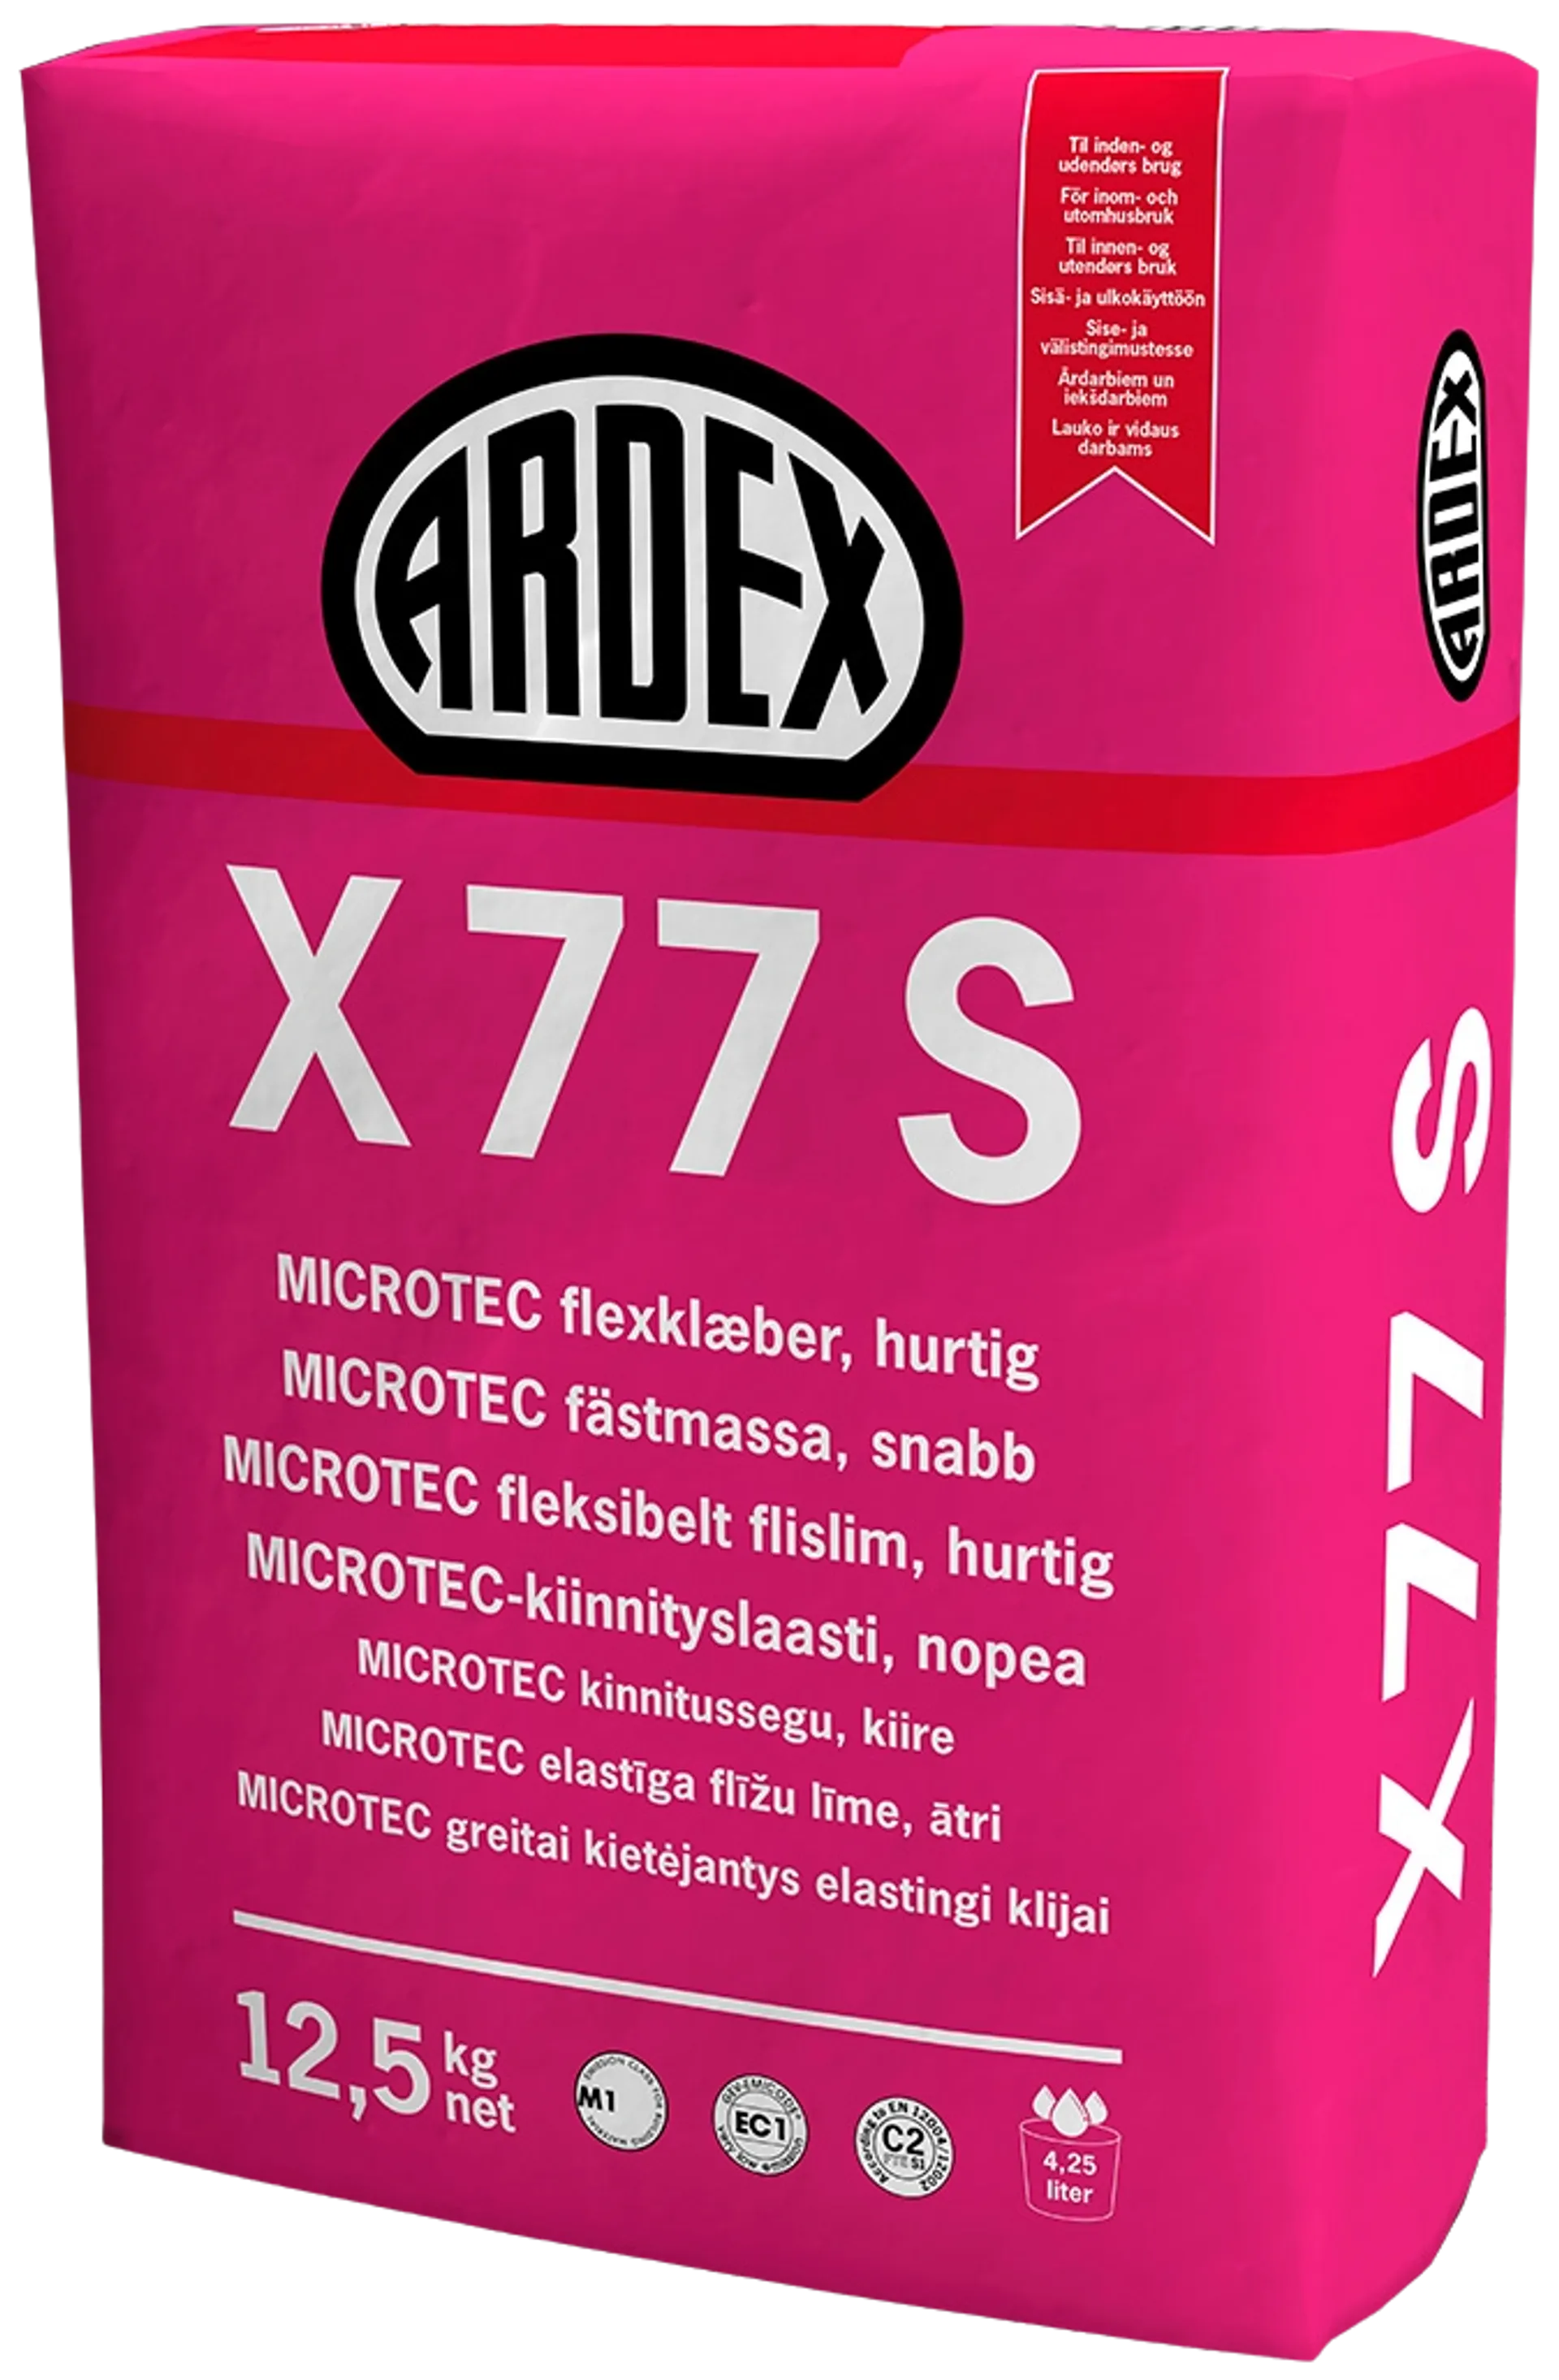 Ardex kiinnityslaasti X 77 S